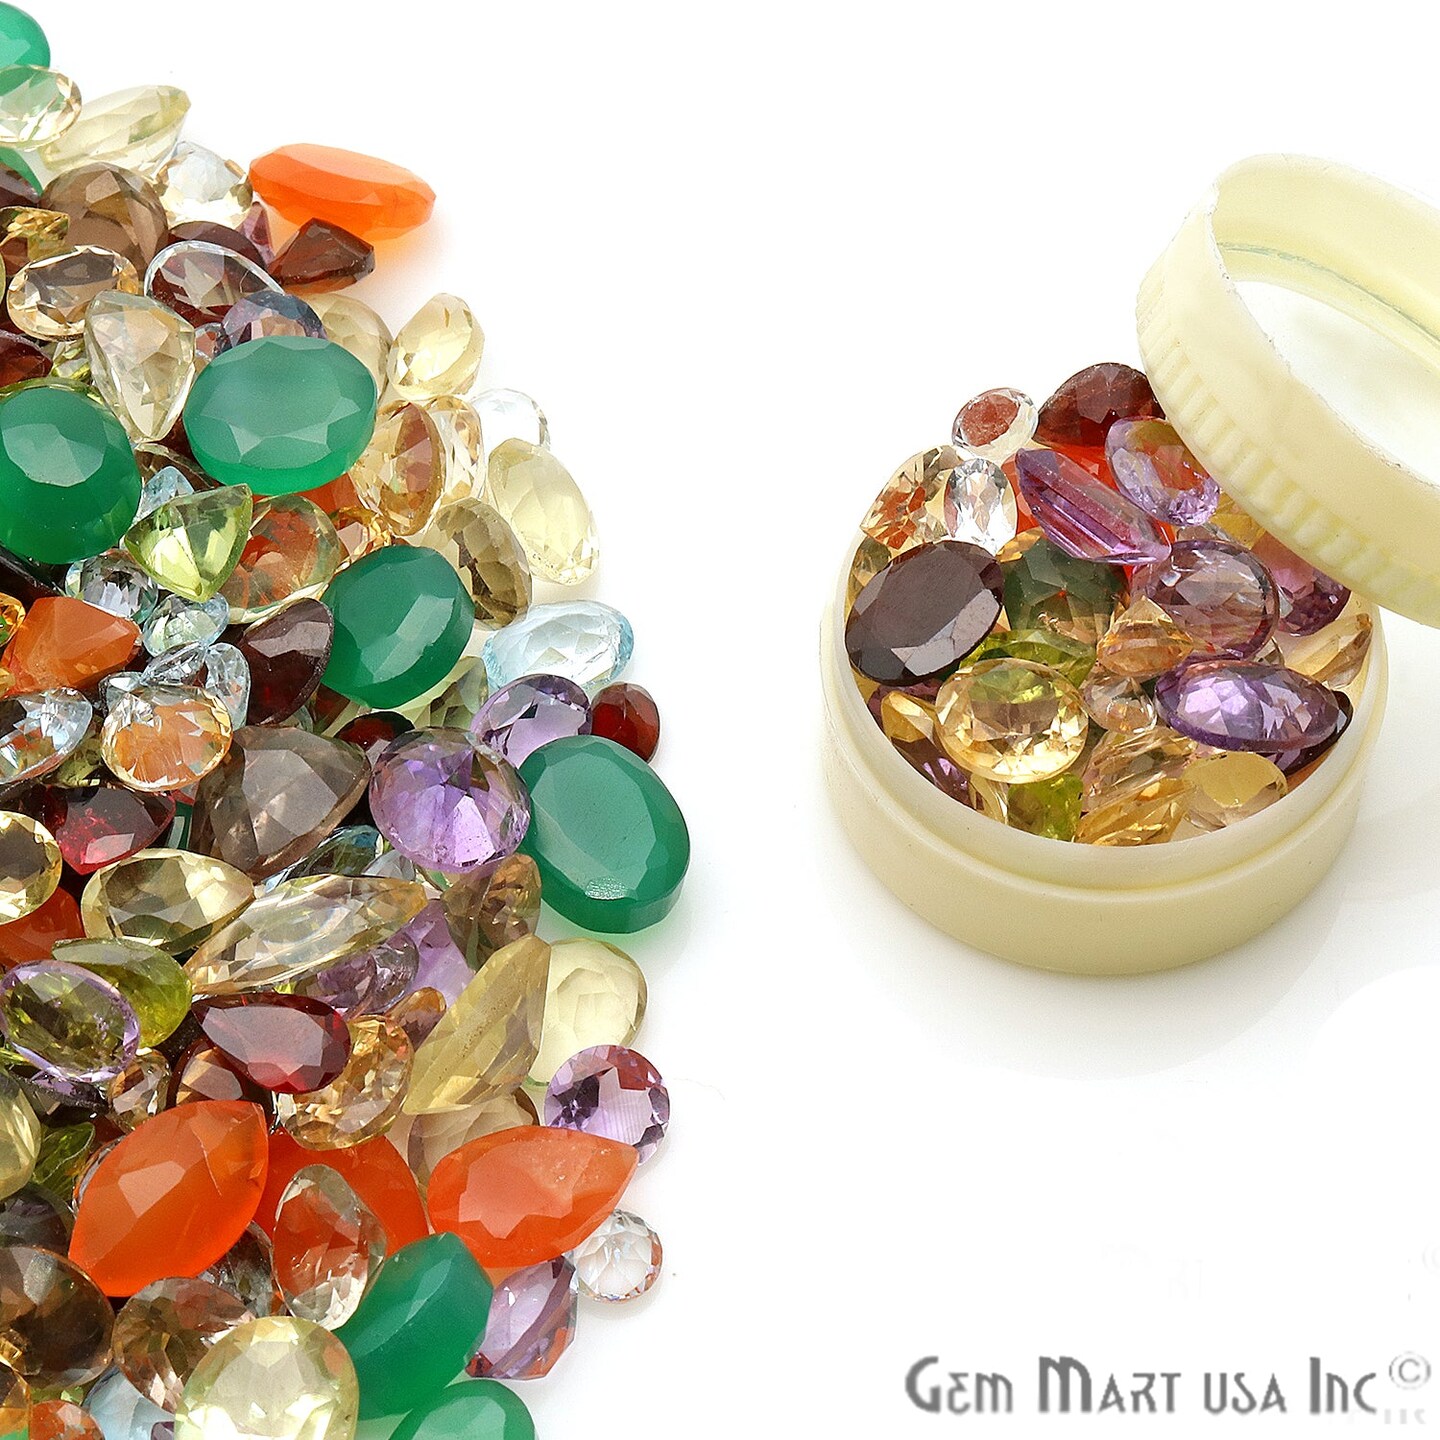 Mix Gemstone, 100% Natural Faceted Loose Gems, Wholesale Gemstones, 6-12mm, 50 Carats, GemMartUSA (MX-60001-50)